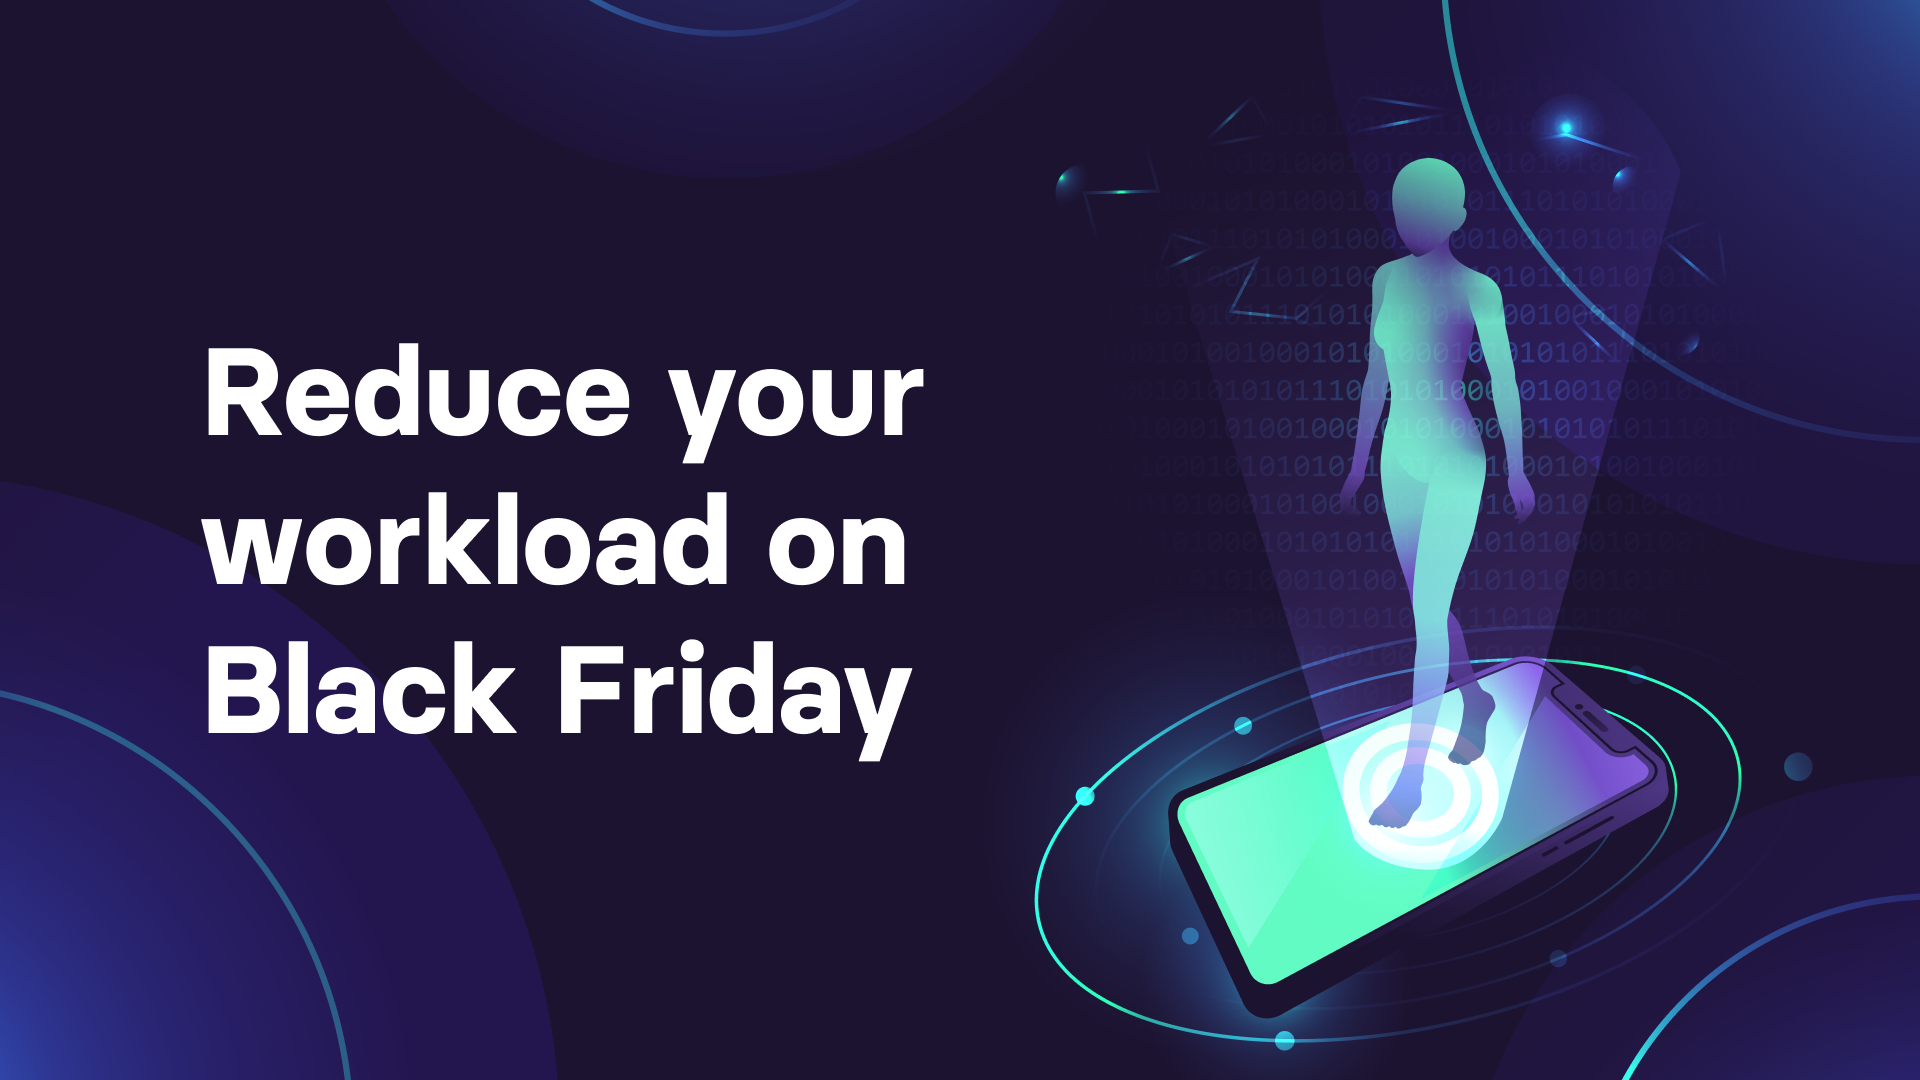 Reduce workload on Black Friday